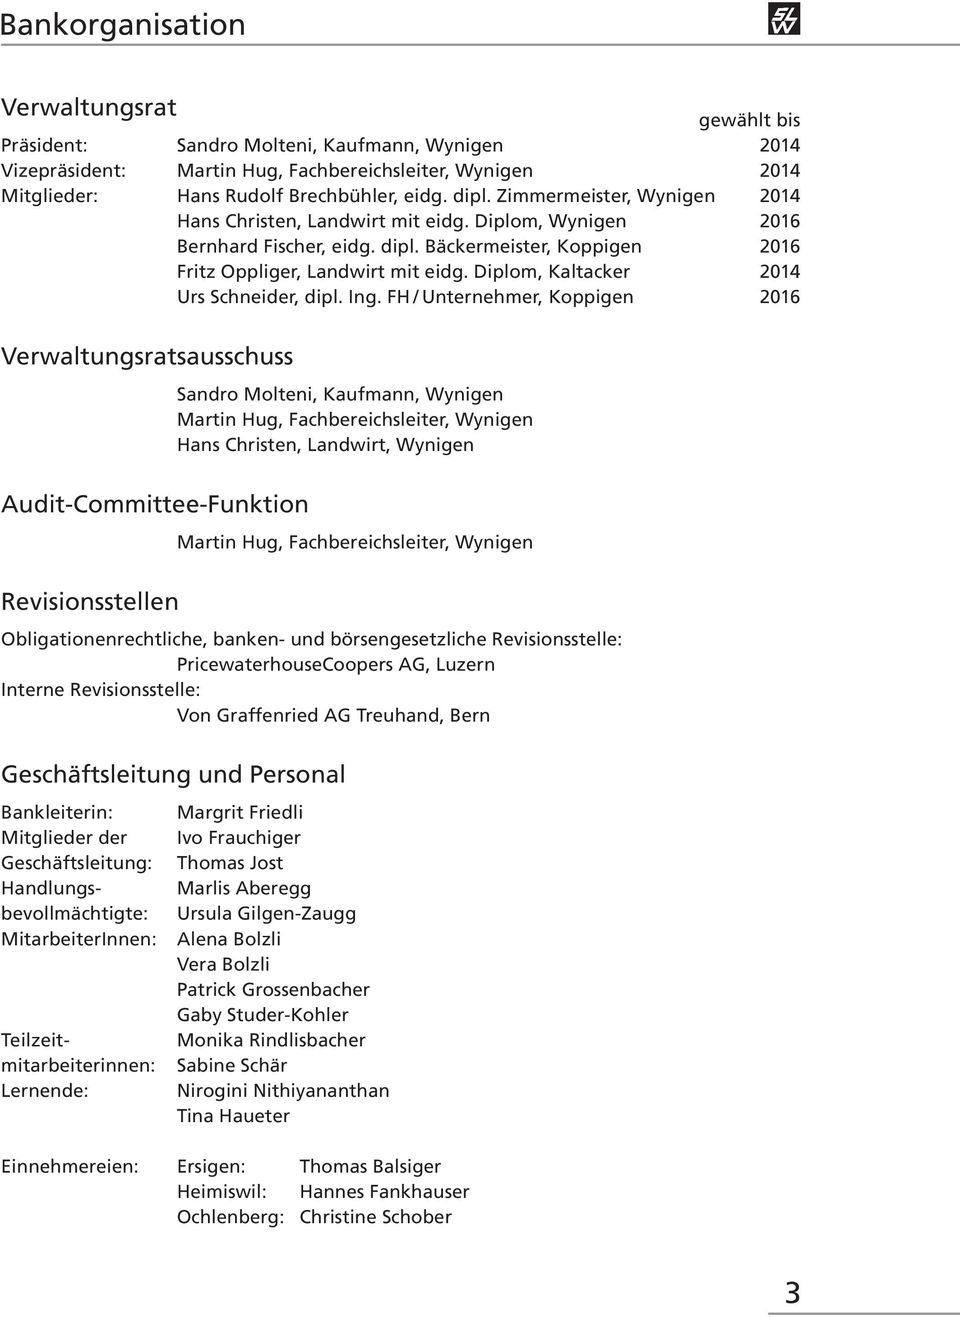 Diplom, Kaltacker 2014 Urs Schneider, dipl. Ing.